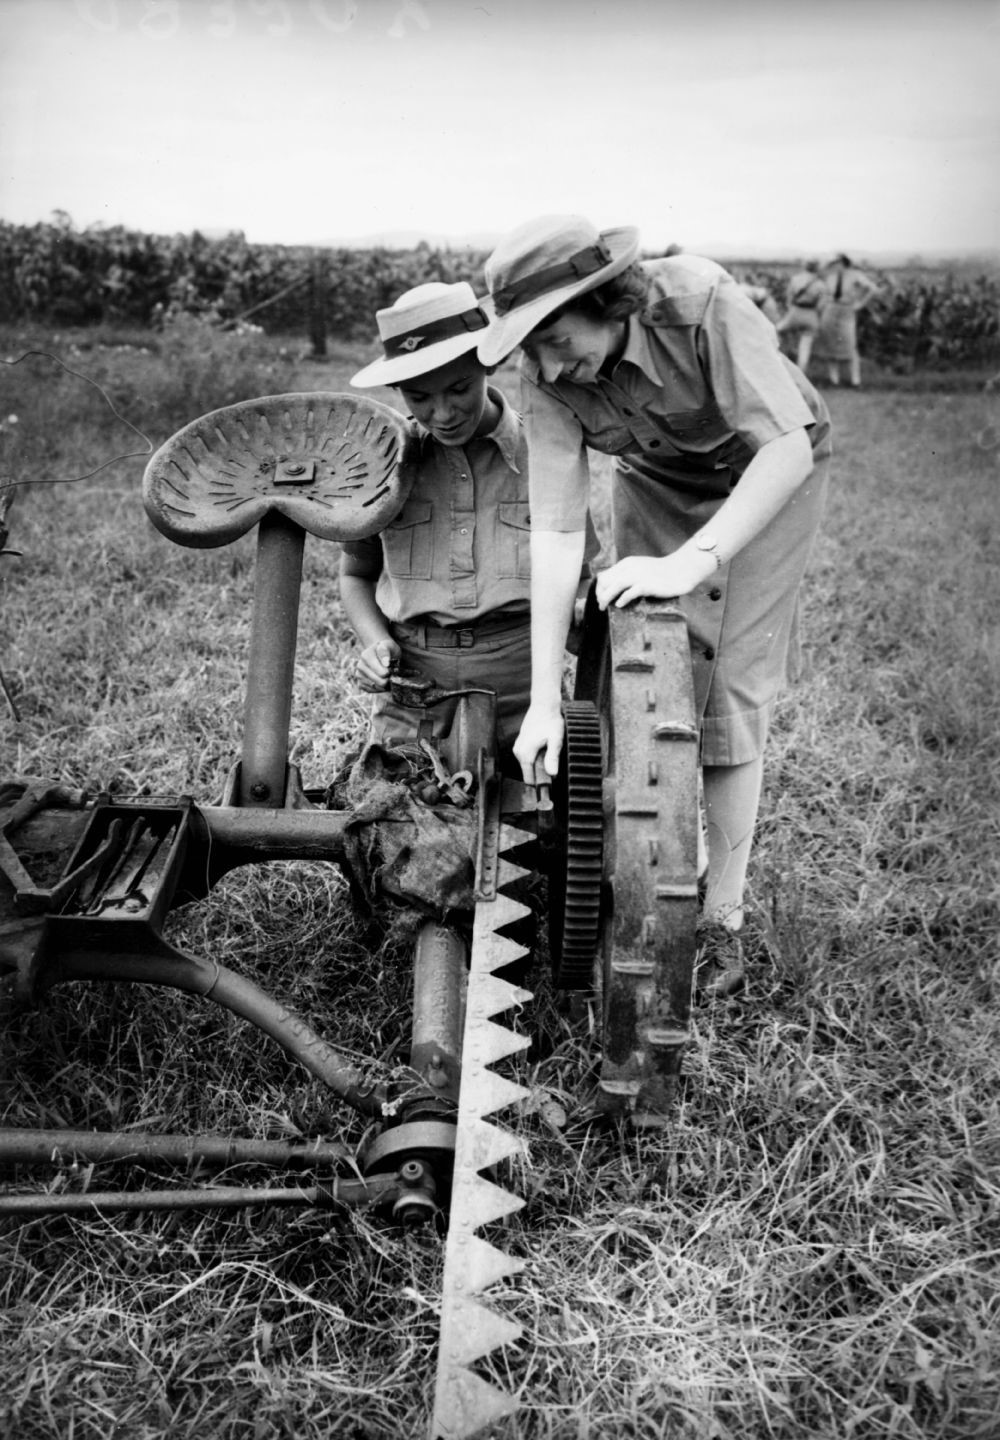 Two women working with farm machinary